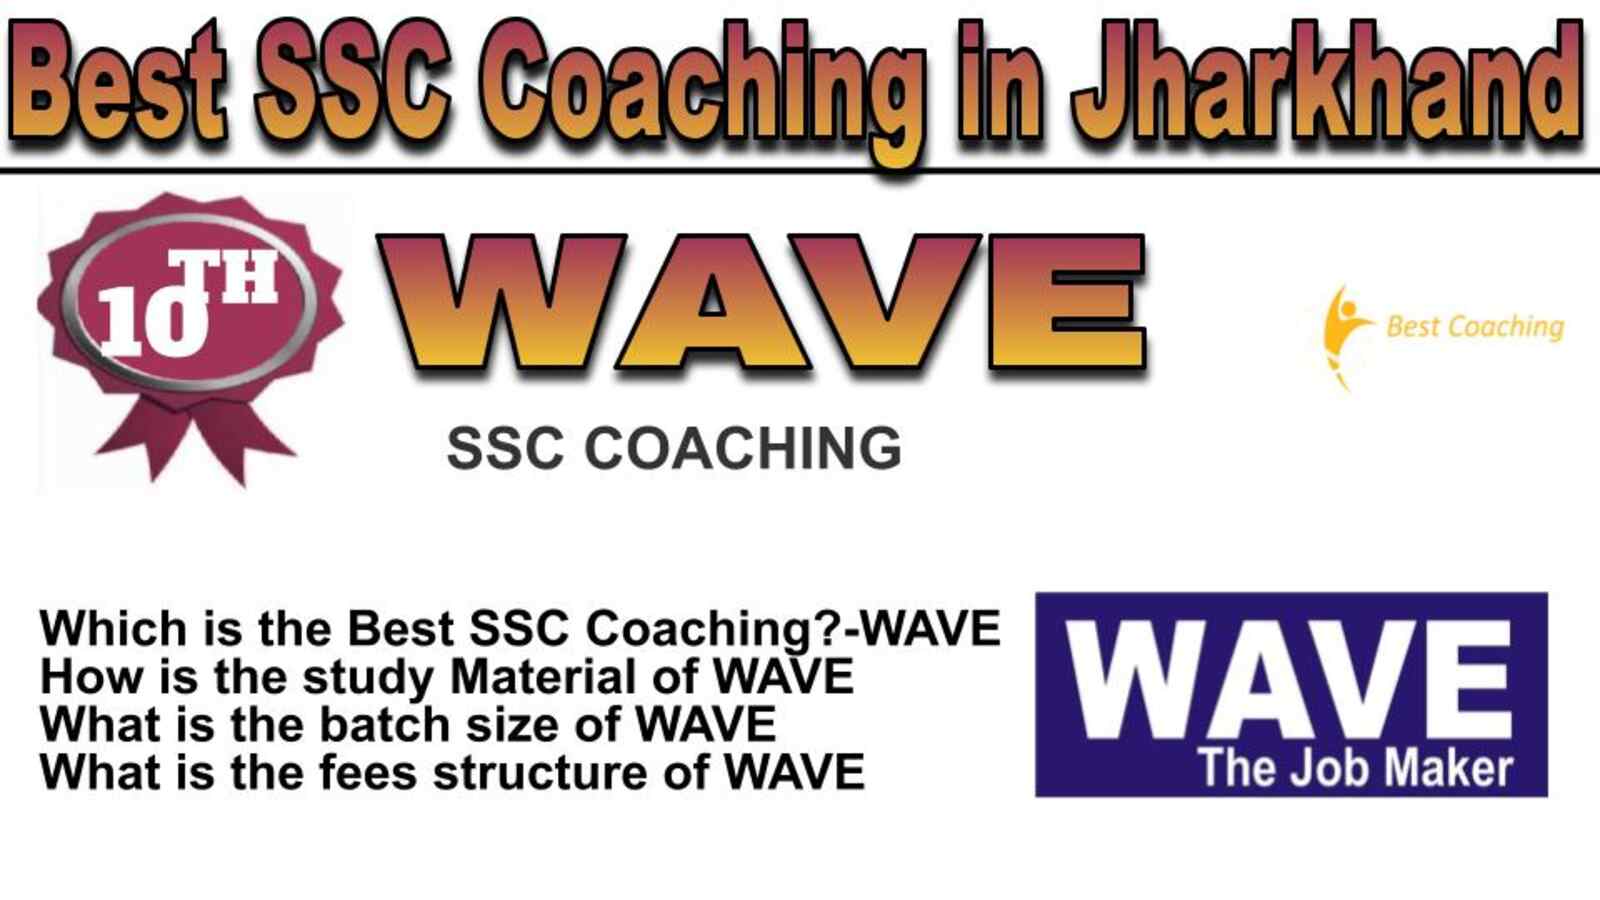 Rank 10 best SSC coaching in Jharkhand